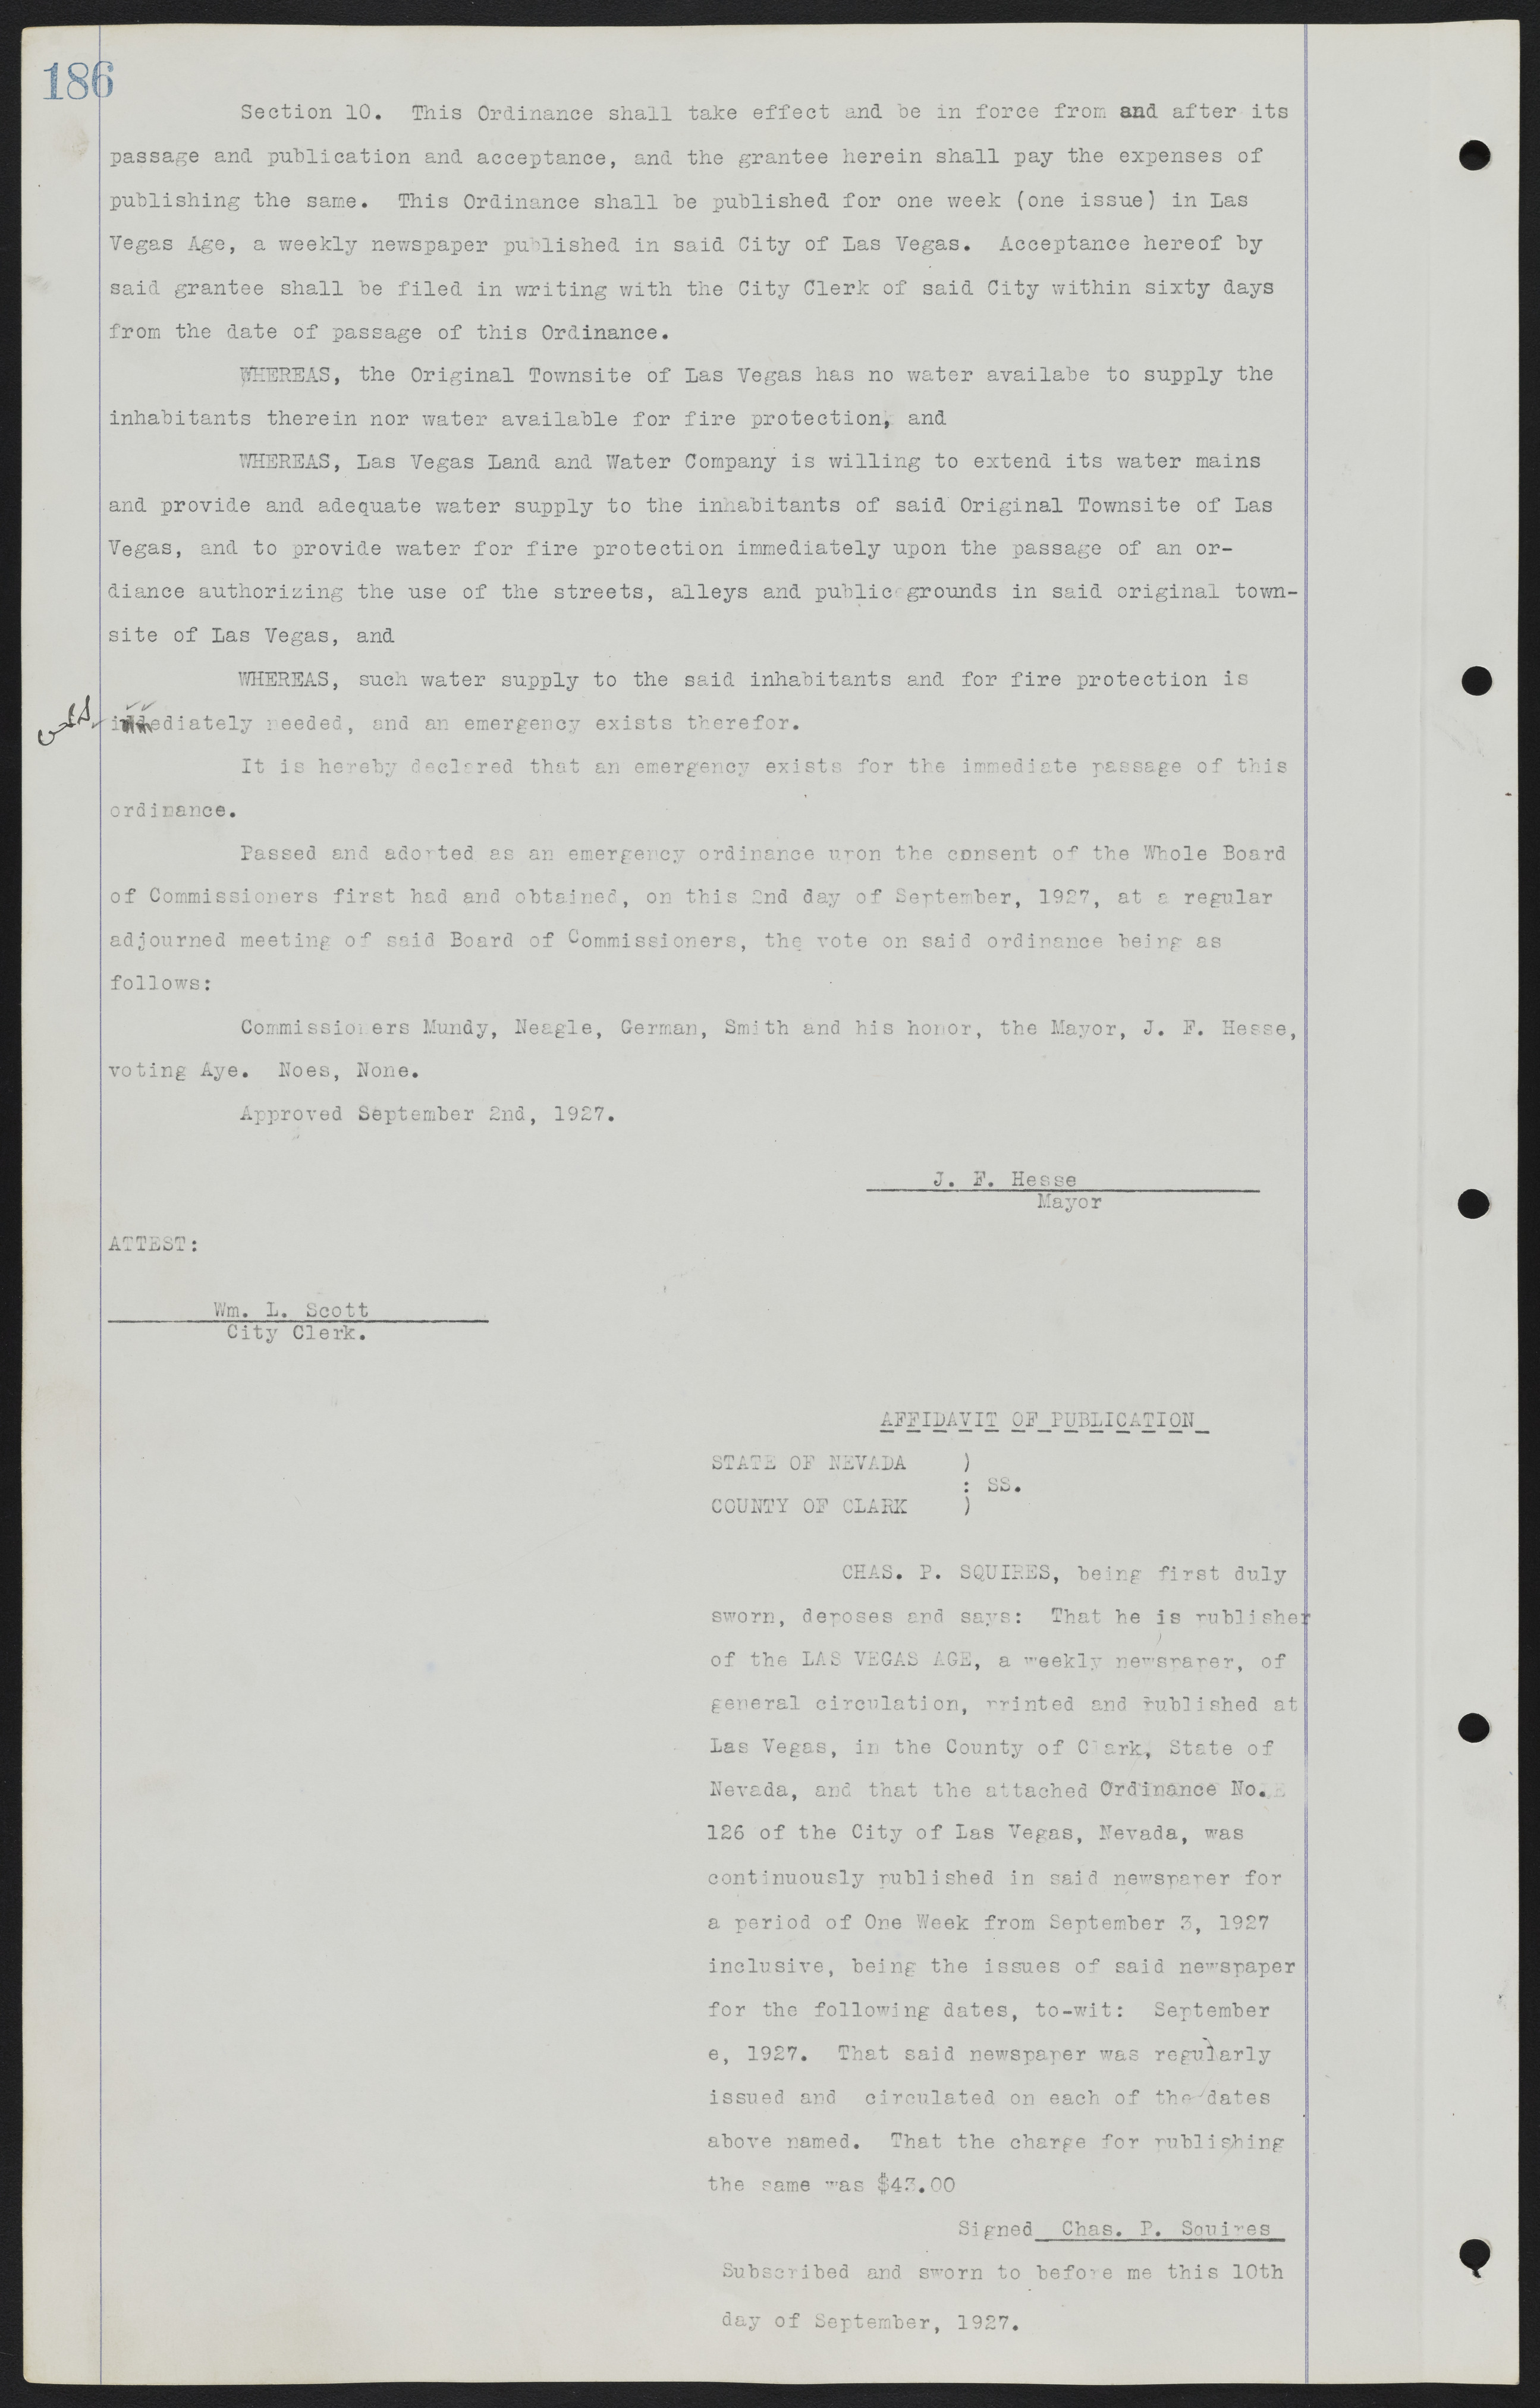 Las Vegas City Ordinances, July 18, 1911 to March 31, 1933, lvc000013-190